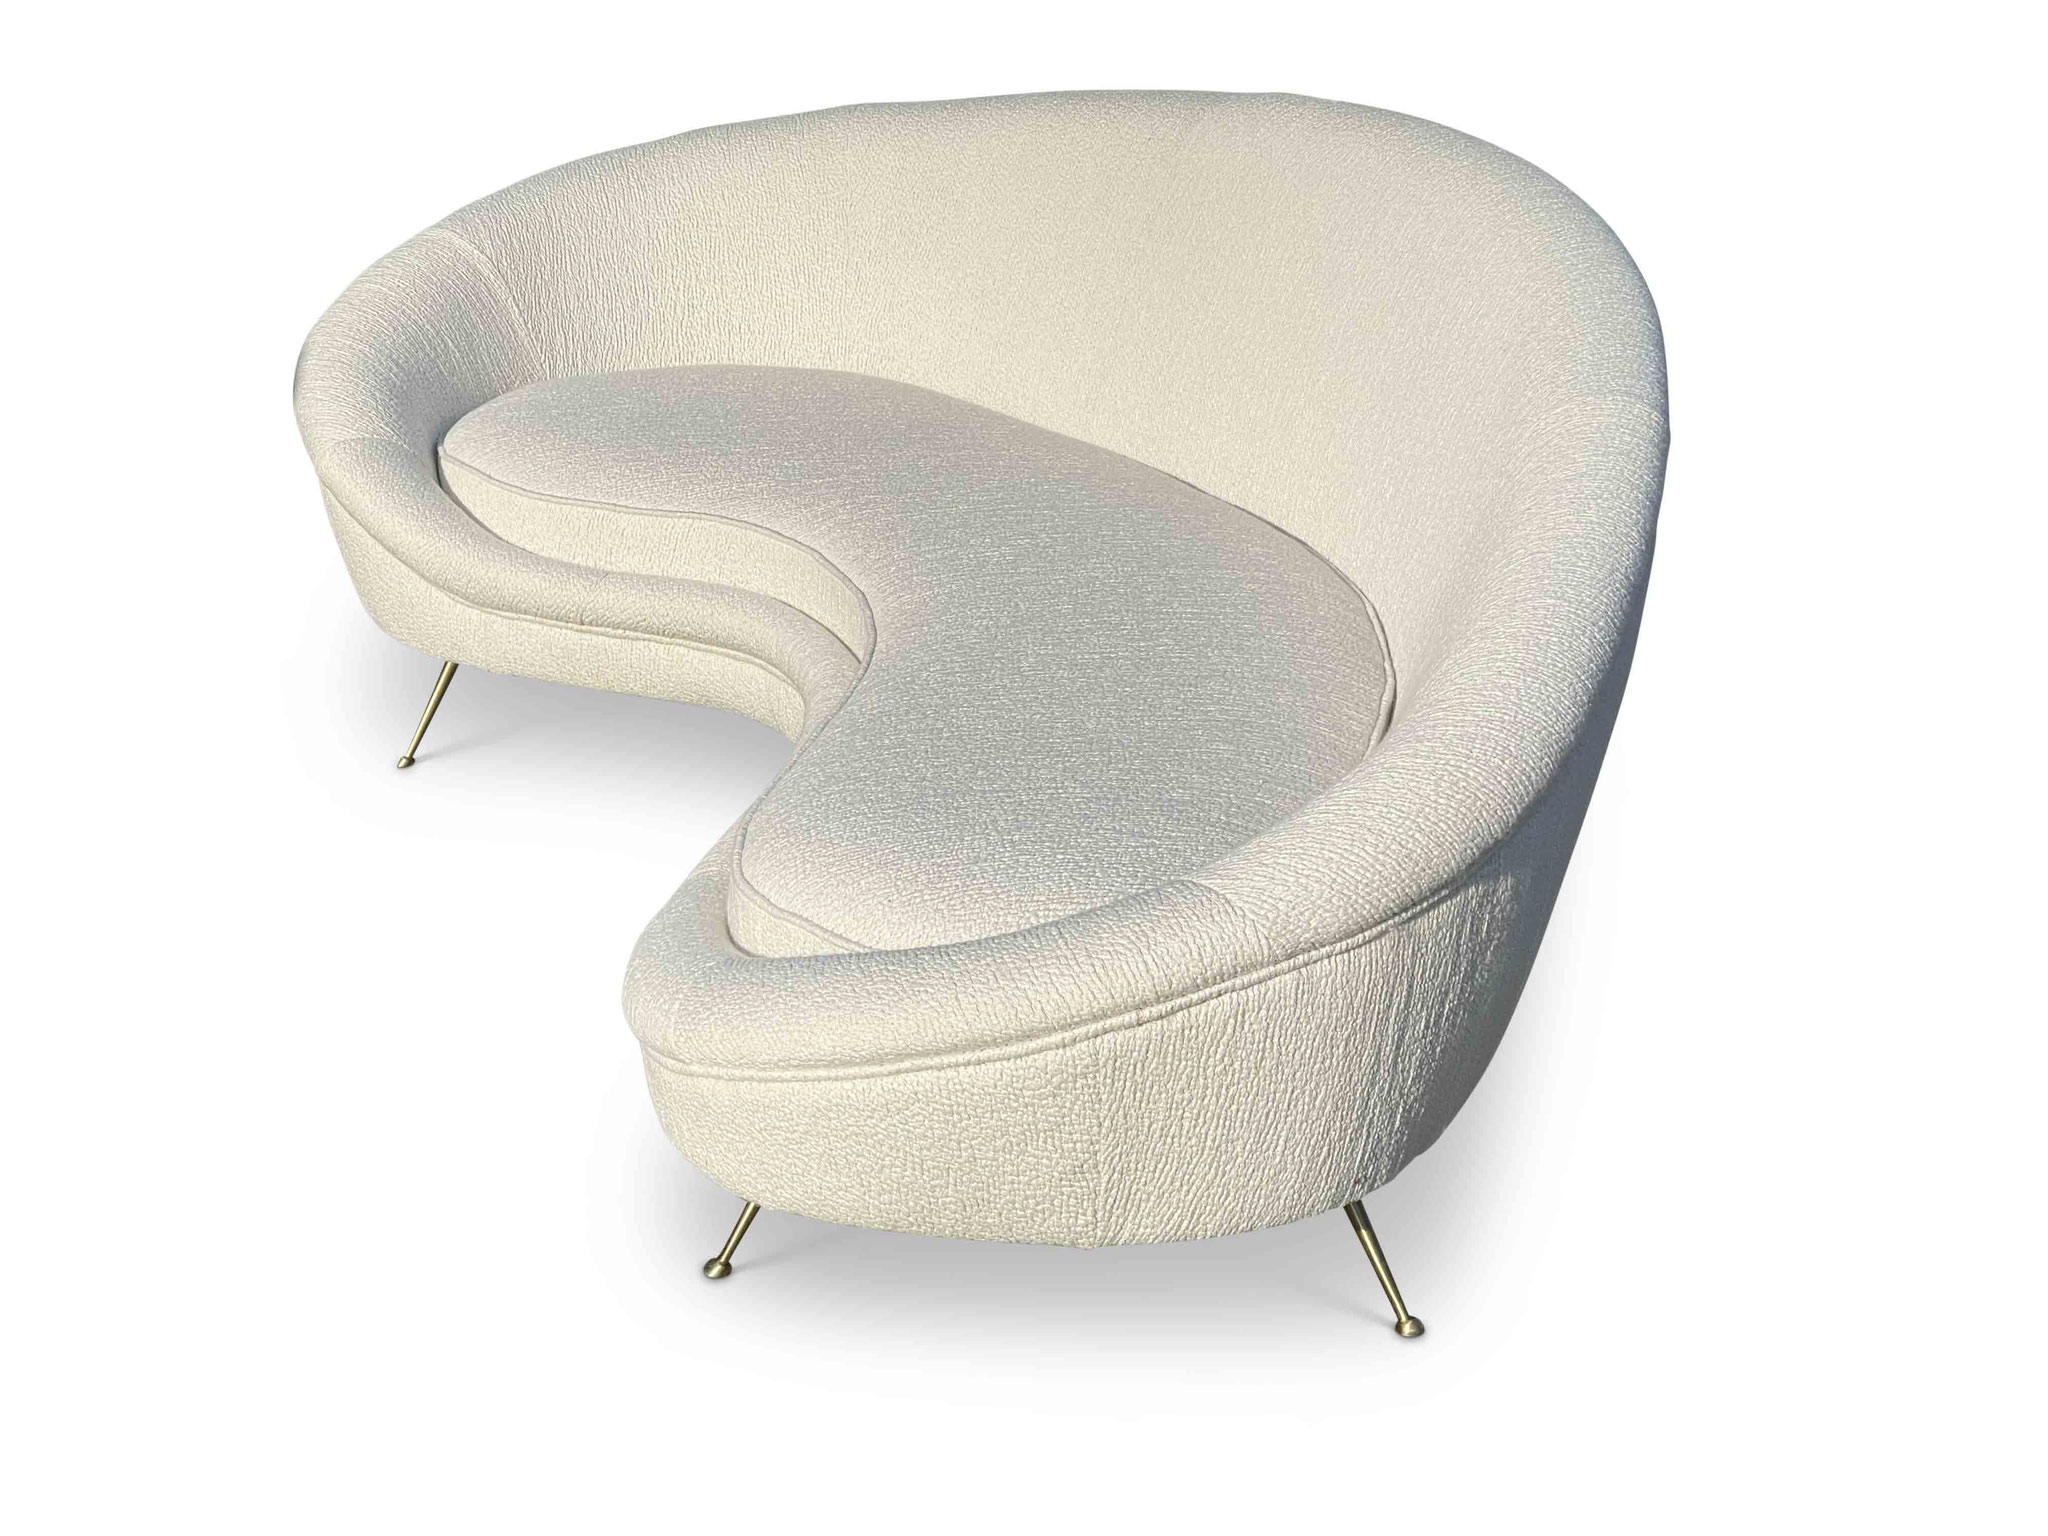 Ico Parisi mid century curved sofa New York